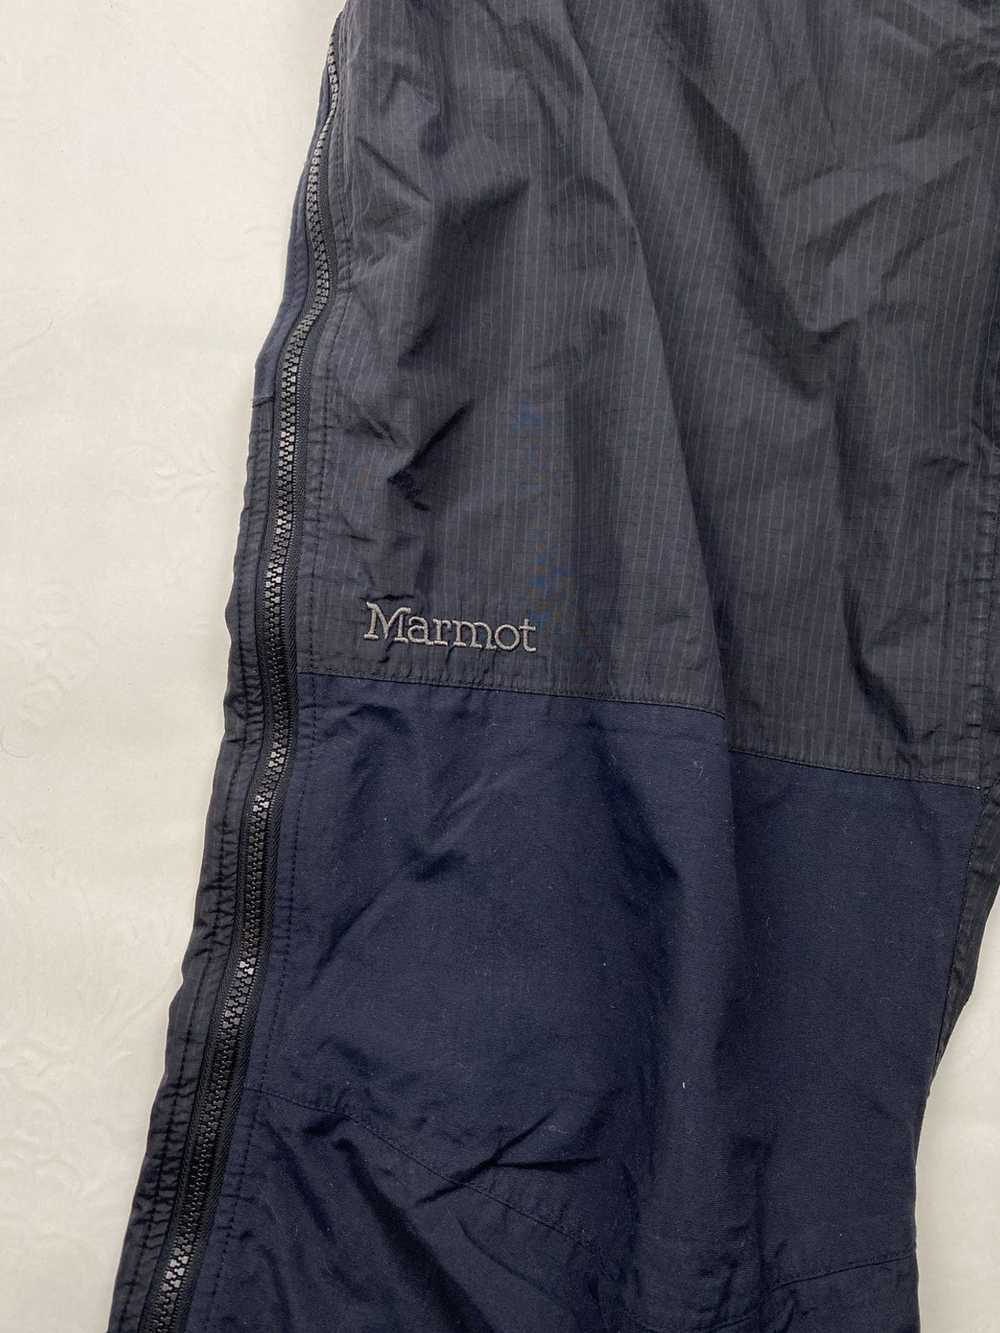 Marmot Marmot Membrane Tracking Pants - image 3